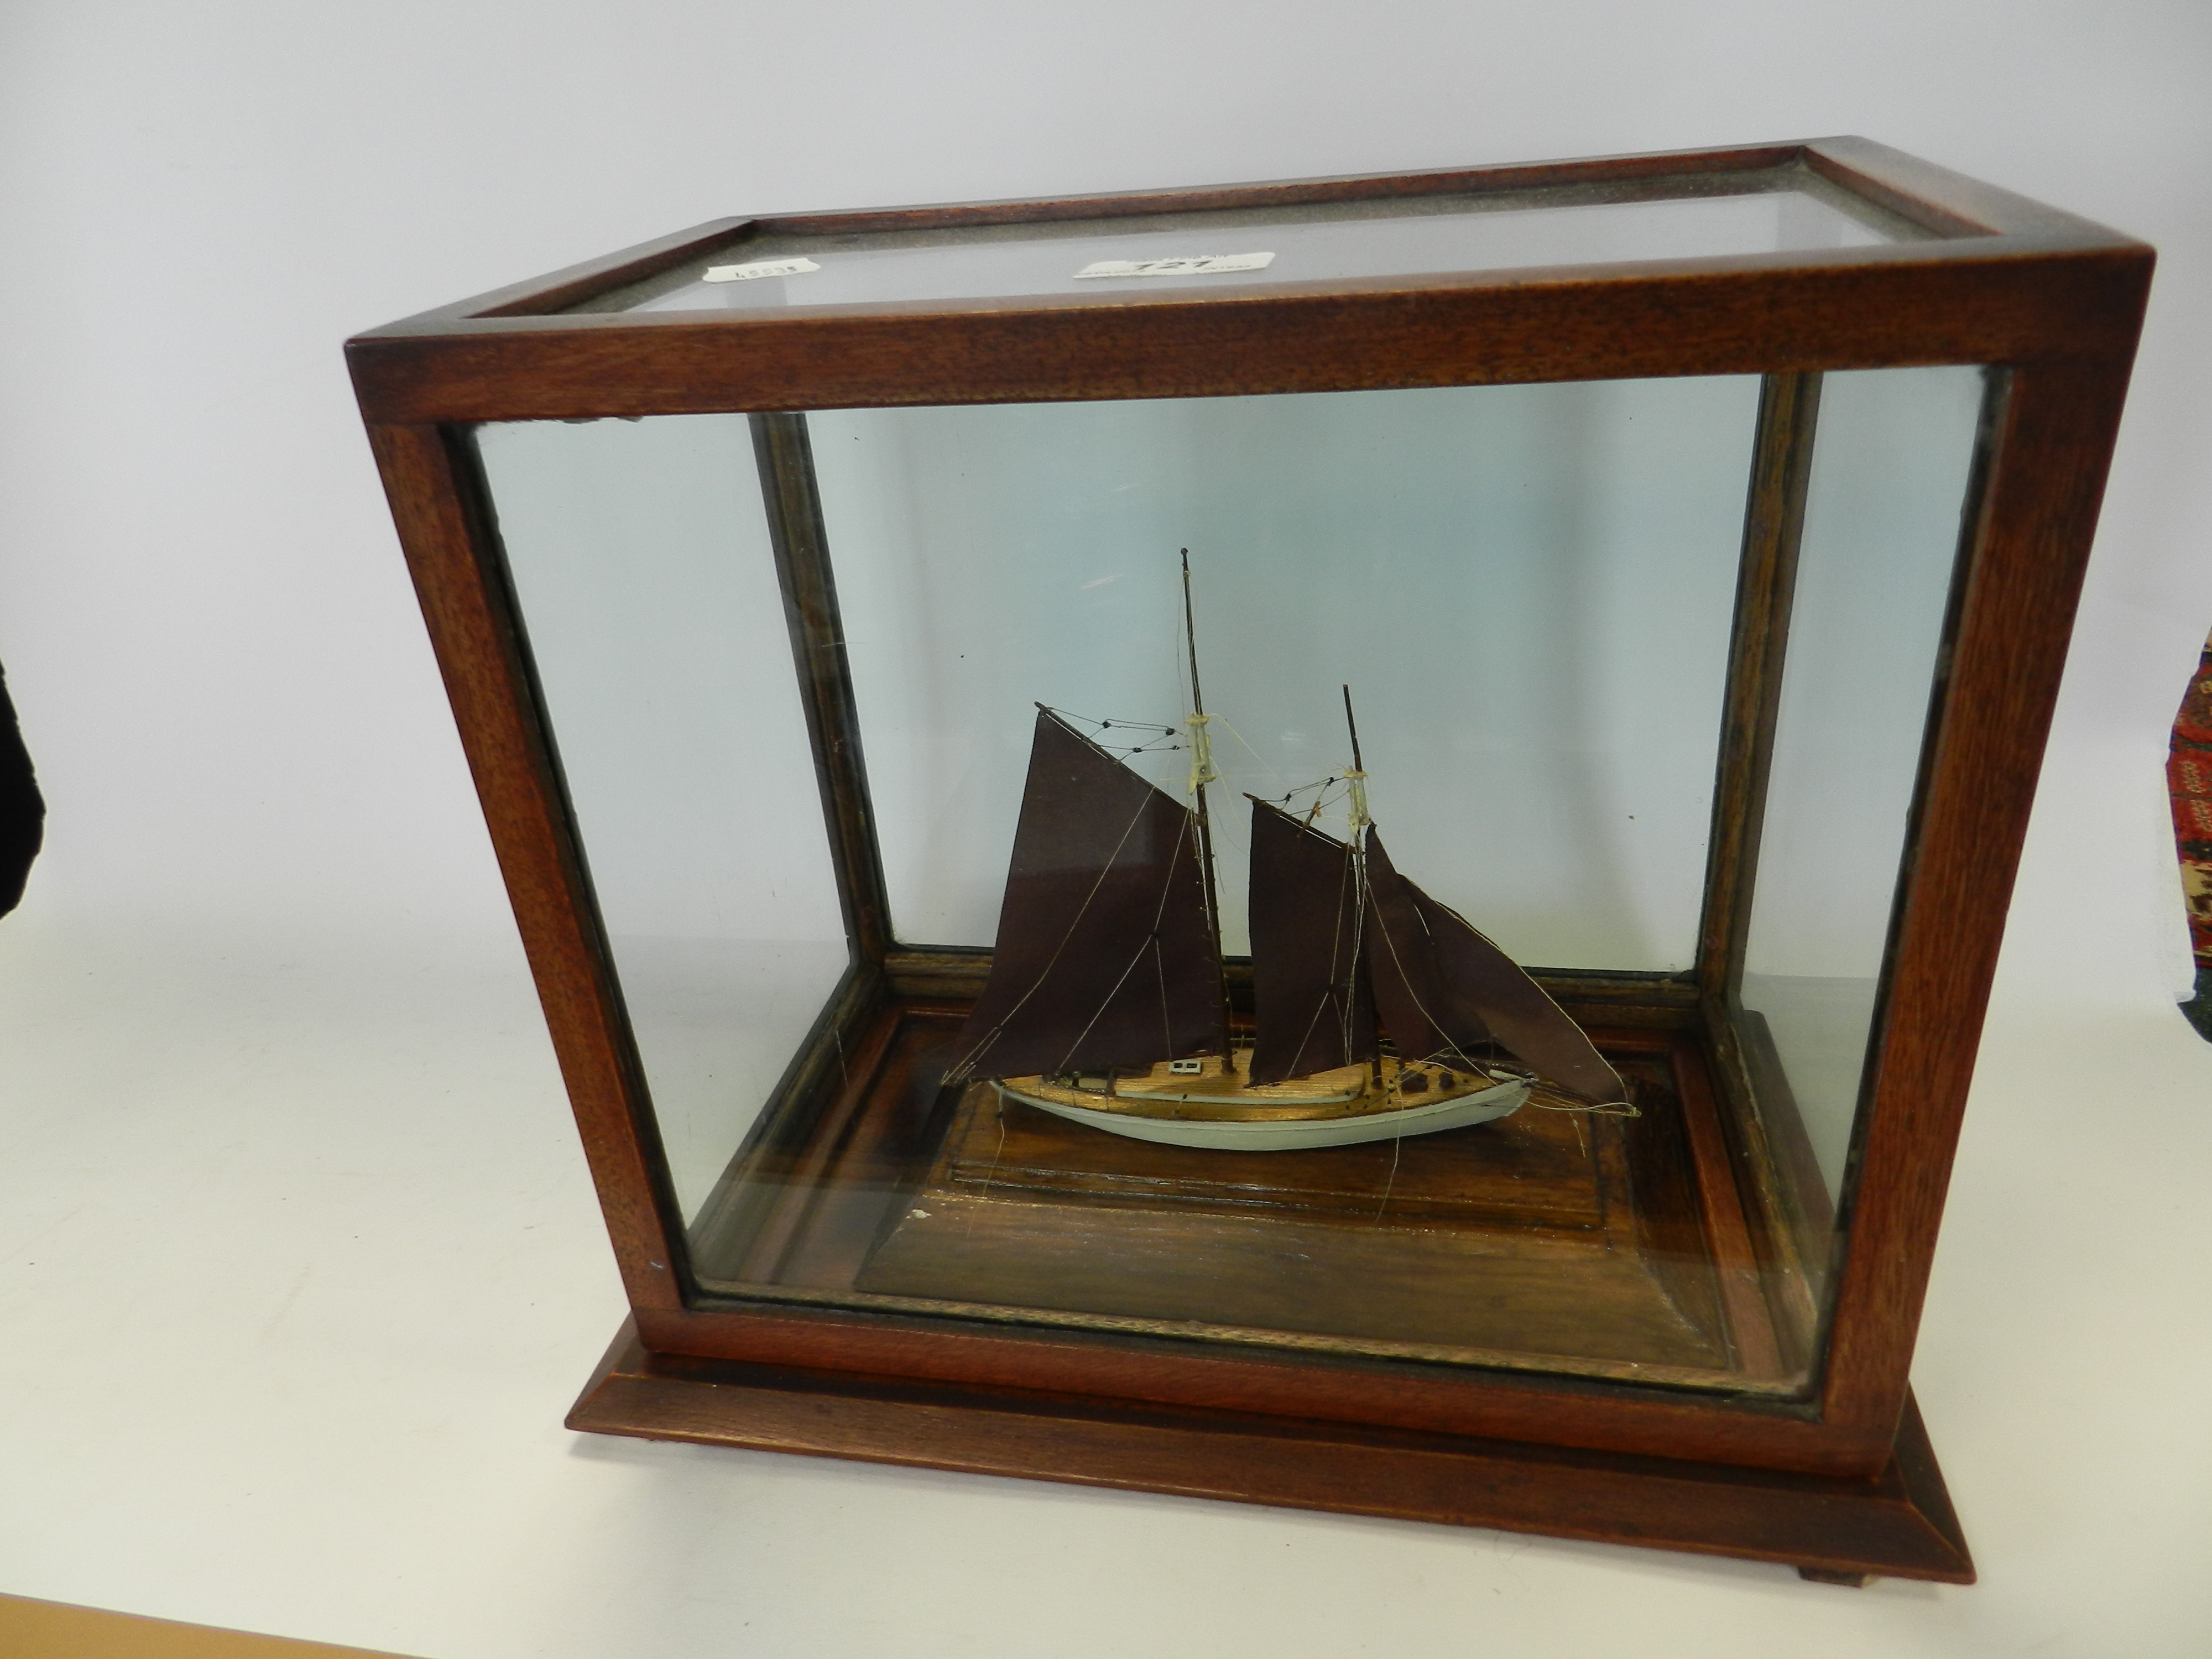 A model boat in presentation case*